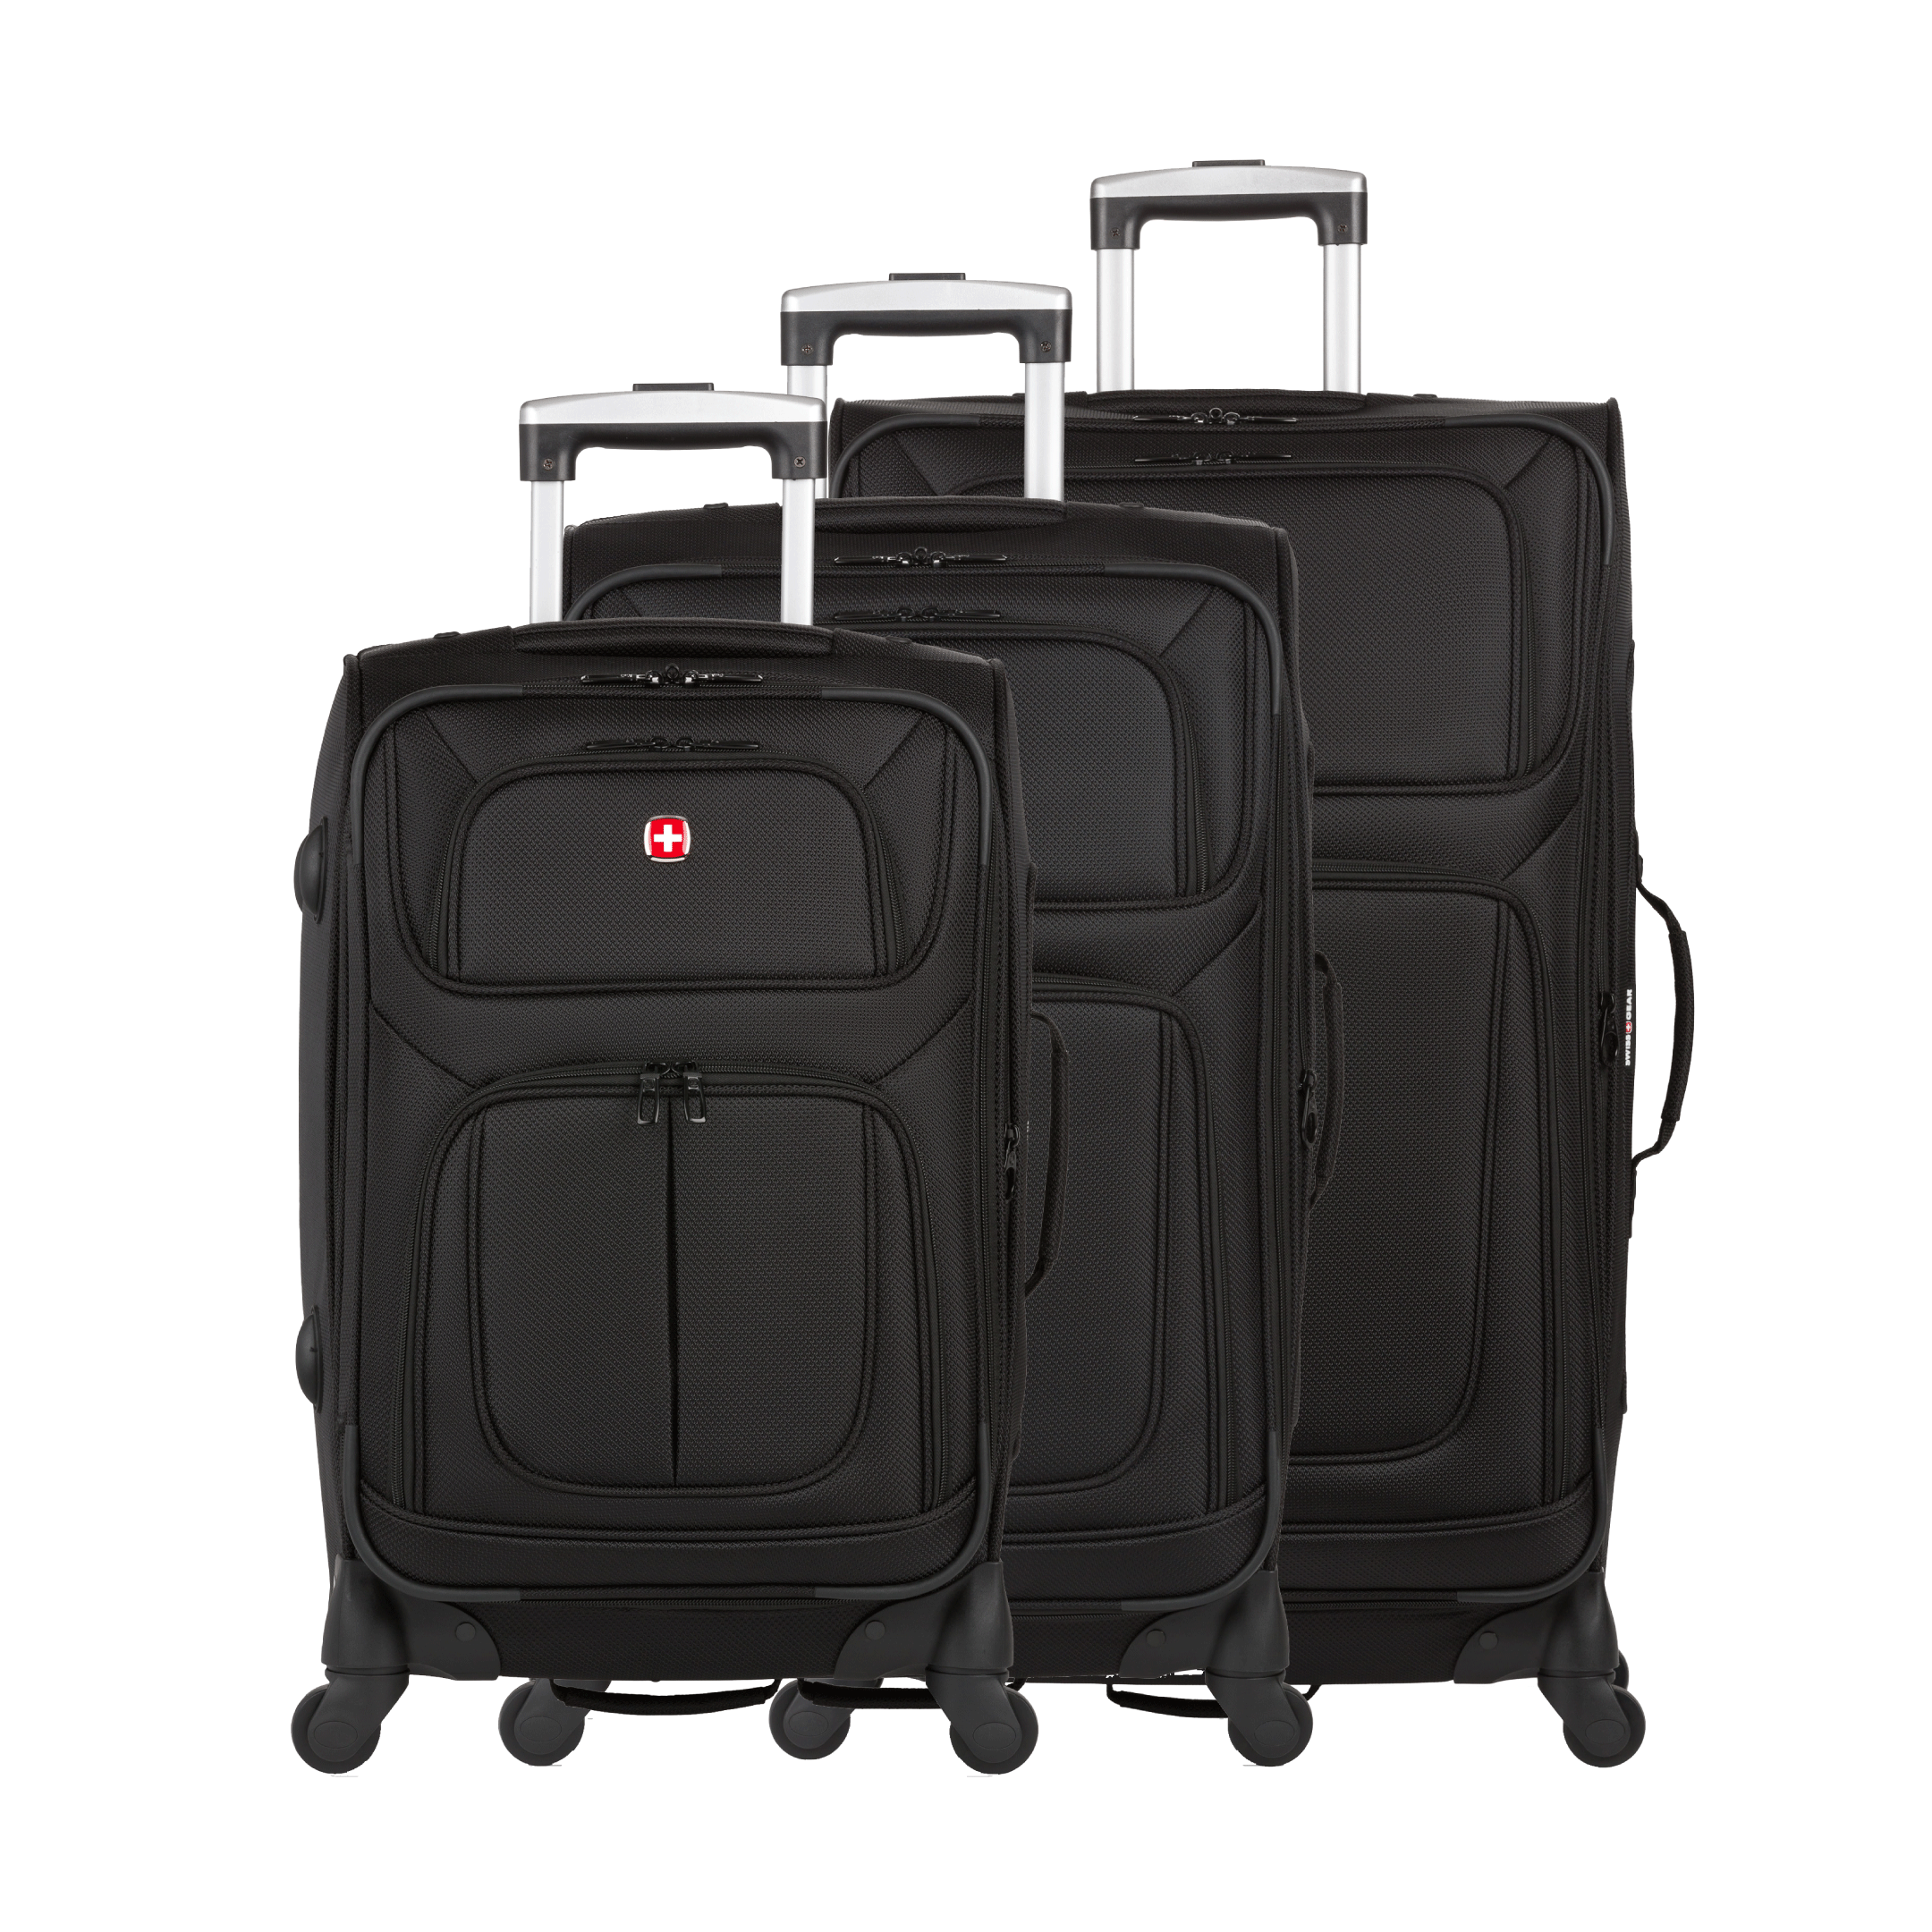 6283 Series Luggage Sets